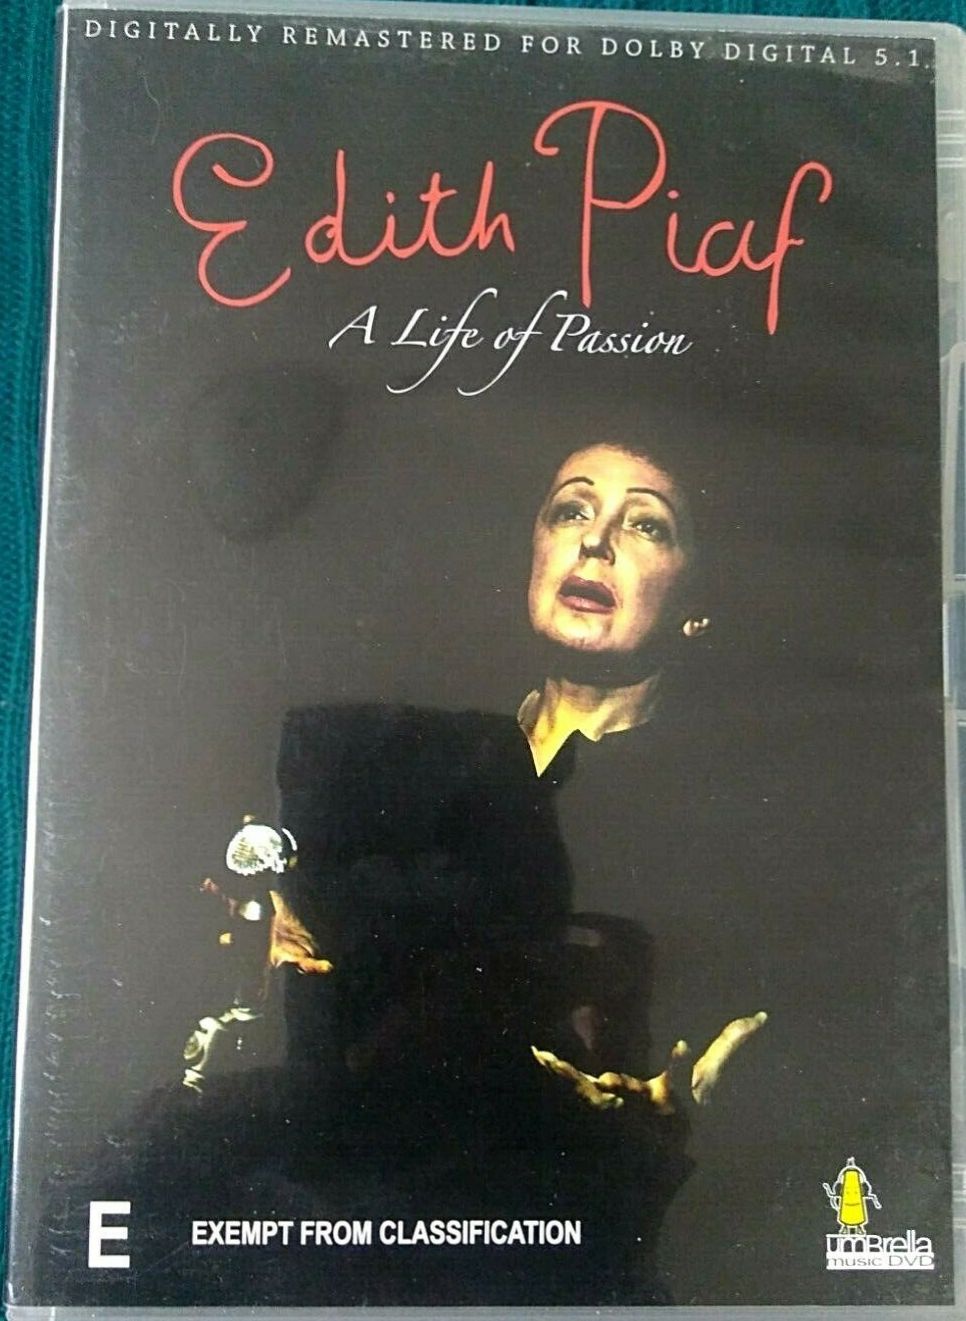 Edith Piaf: A Life of Passion DVD (Australia)